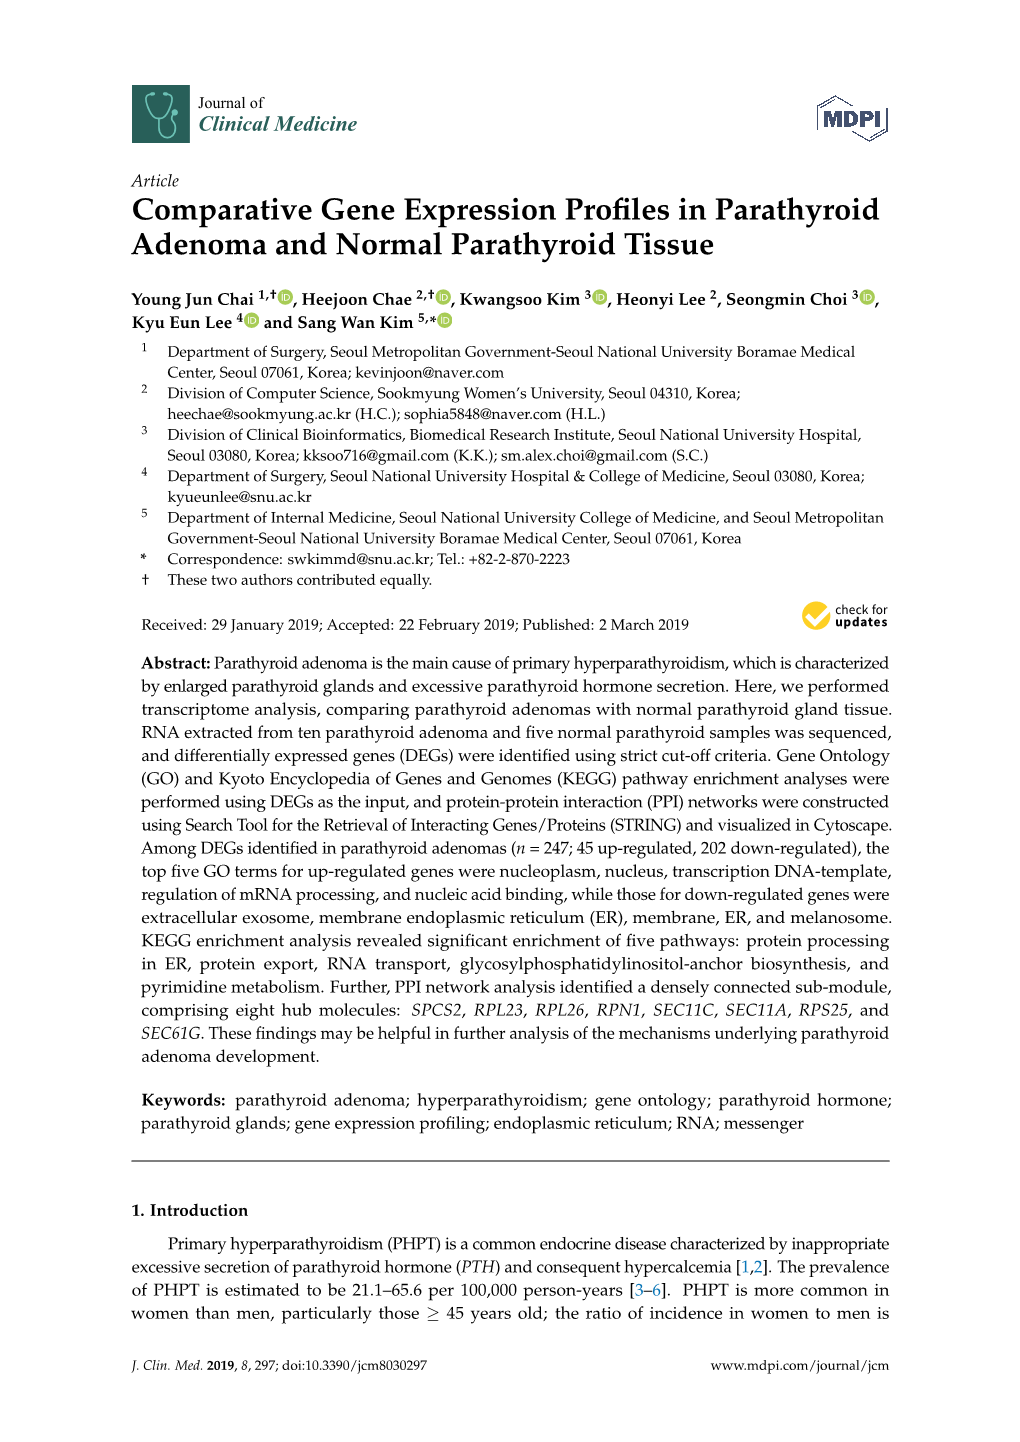 Comparative Gene Expression Profiles in Parathyroid Adenoma